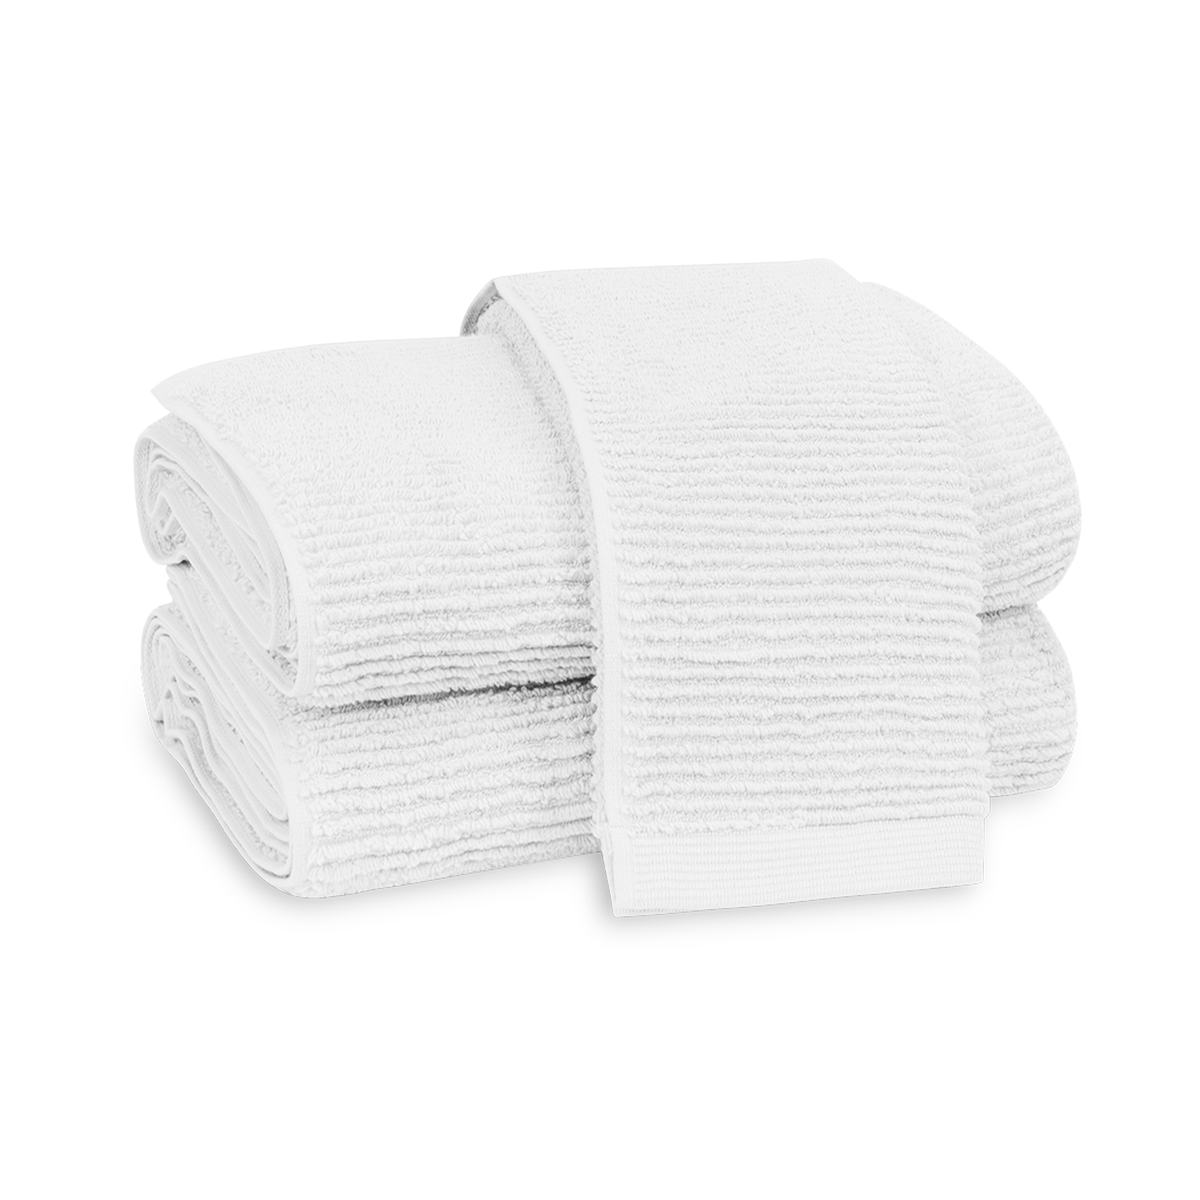 Closeup Image of Matouk Aman Bath Towels in White  Color